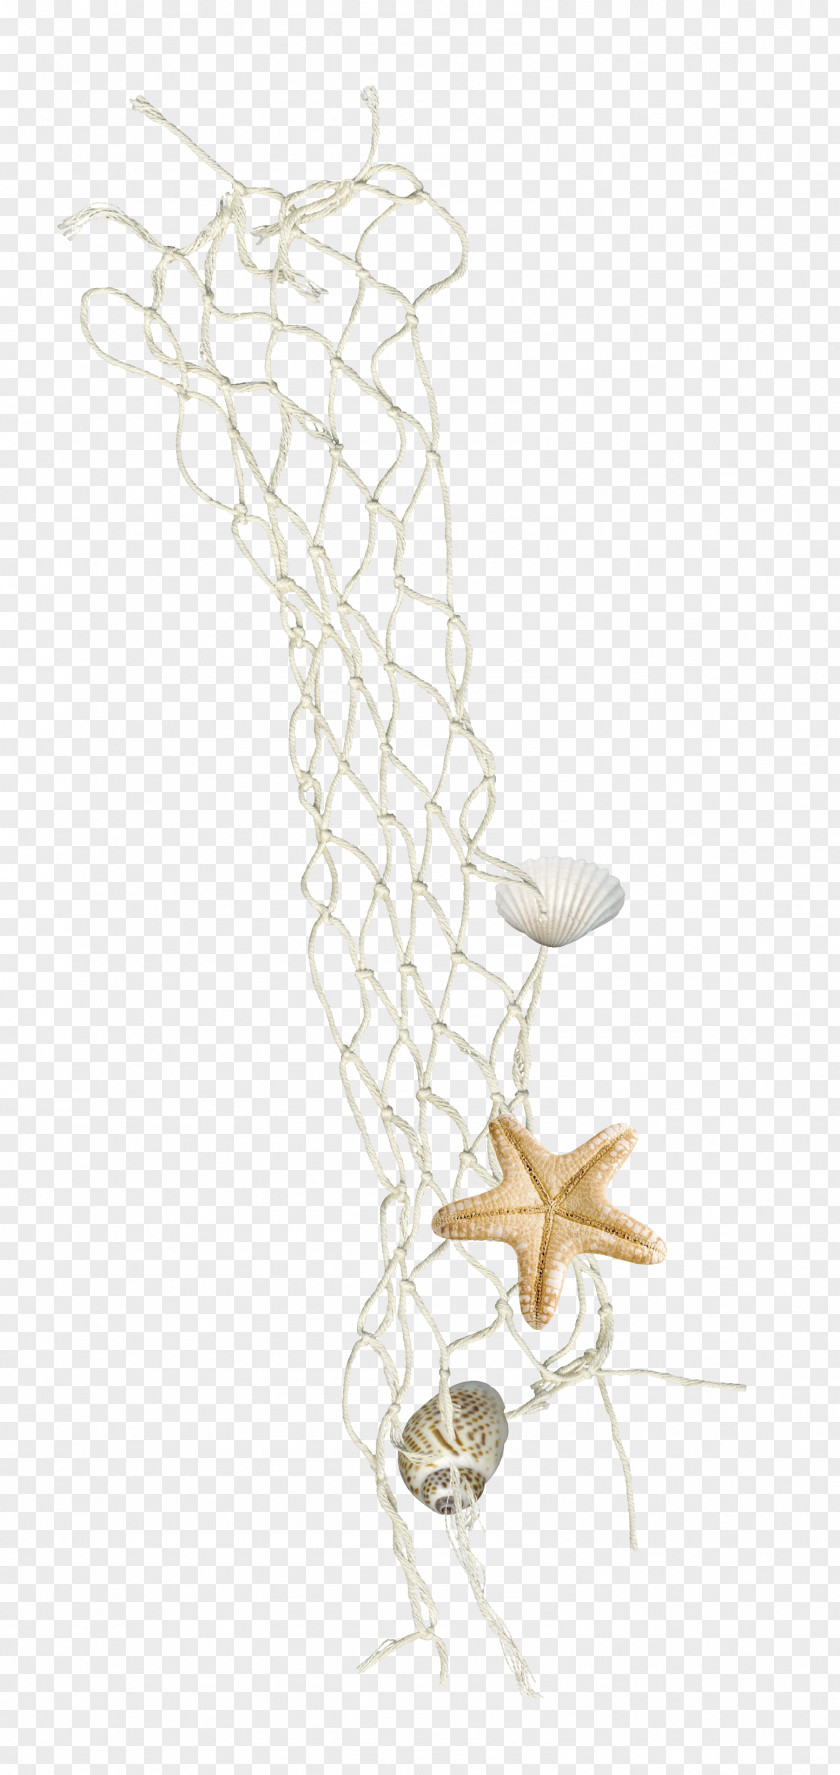 Brown Mesh Rope Knot Fishing Net PNG